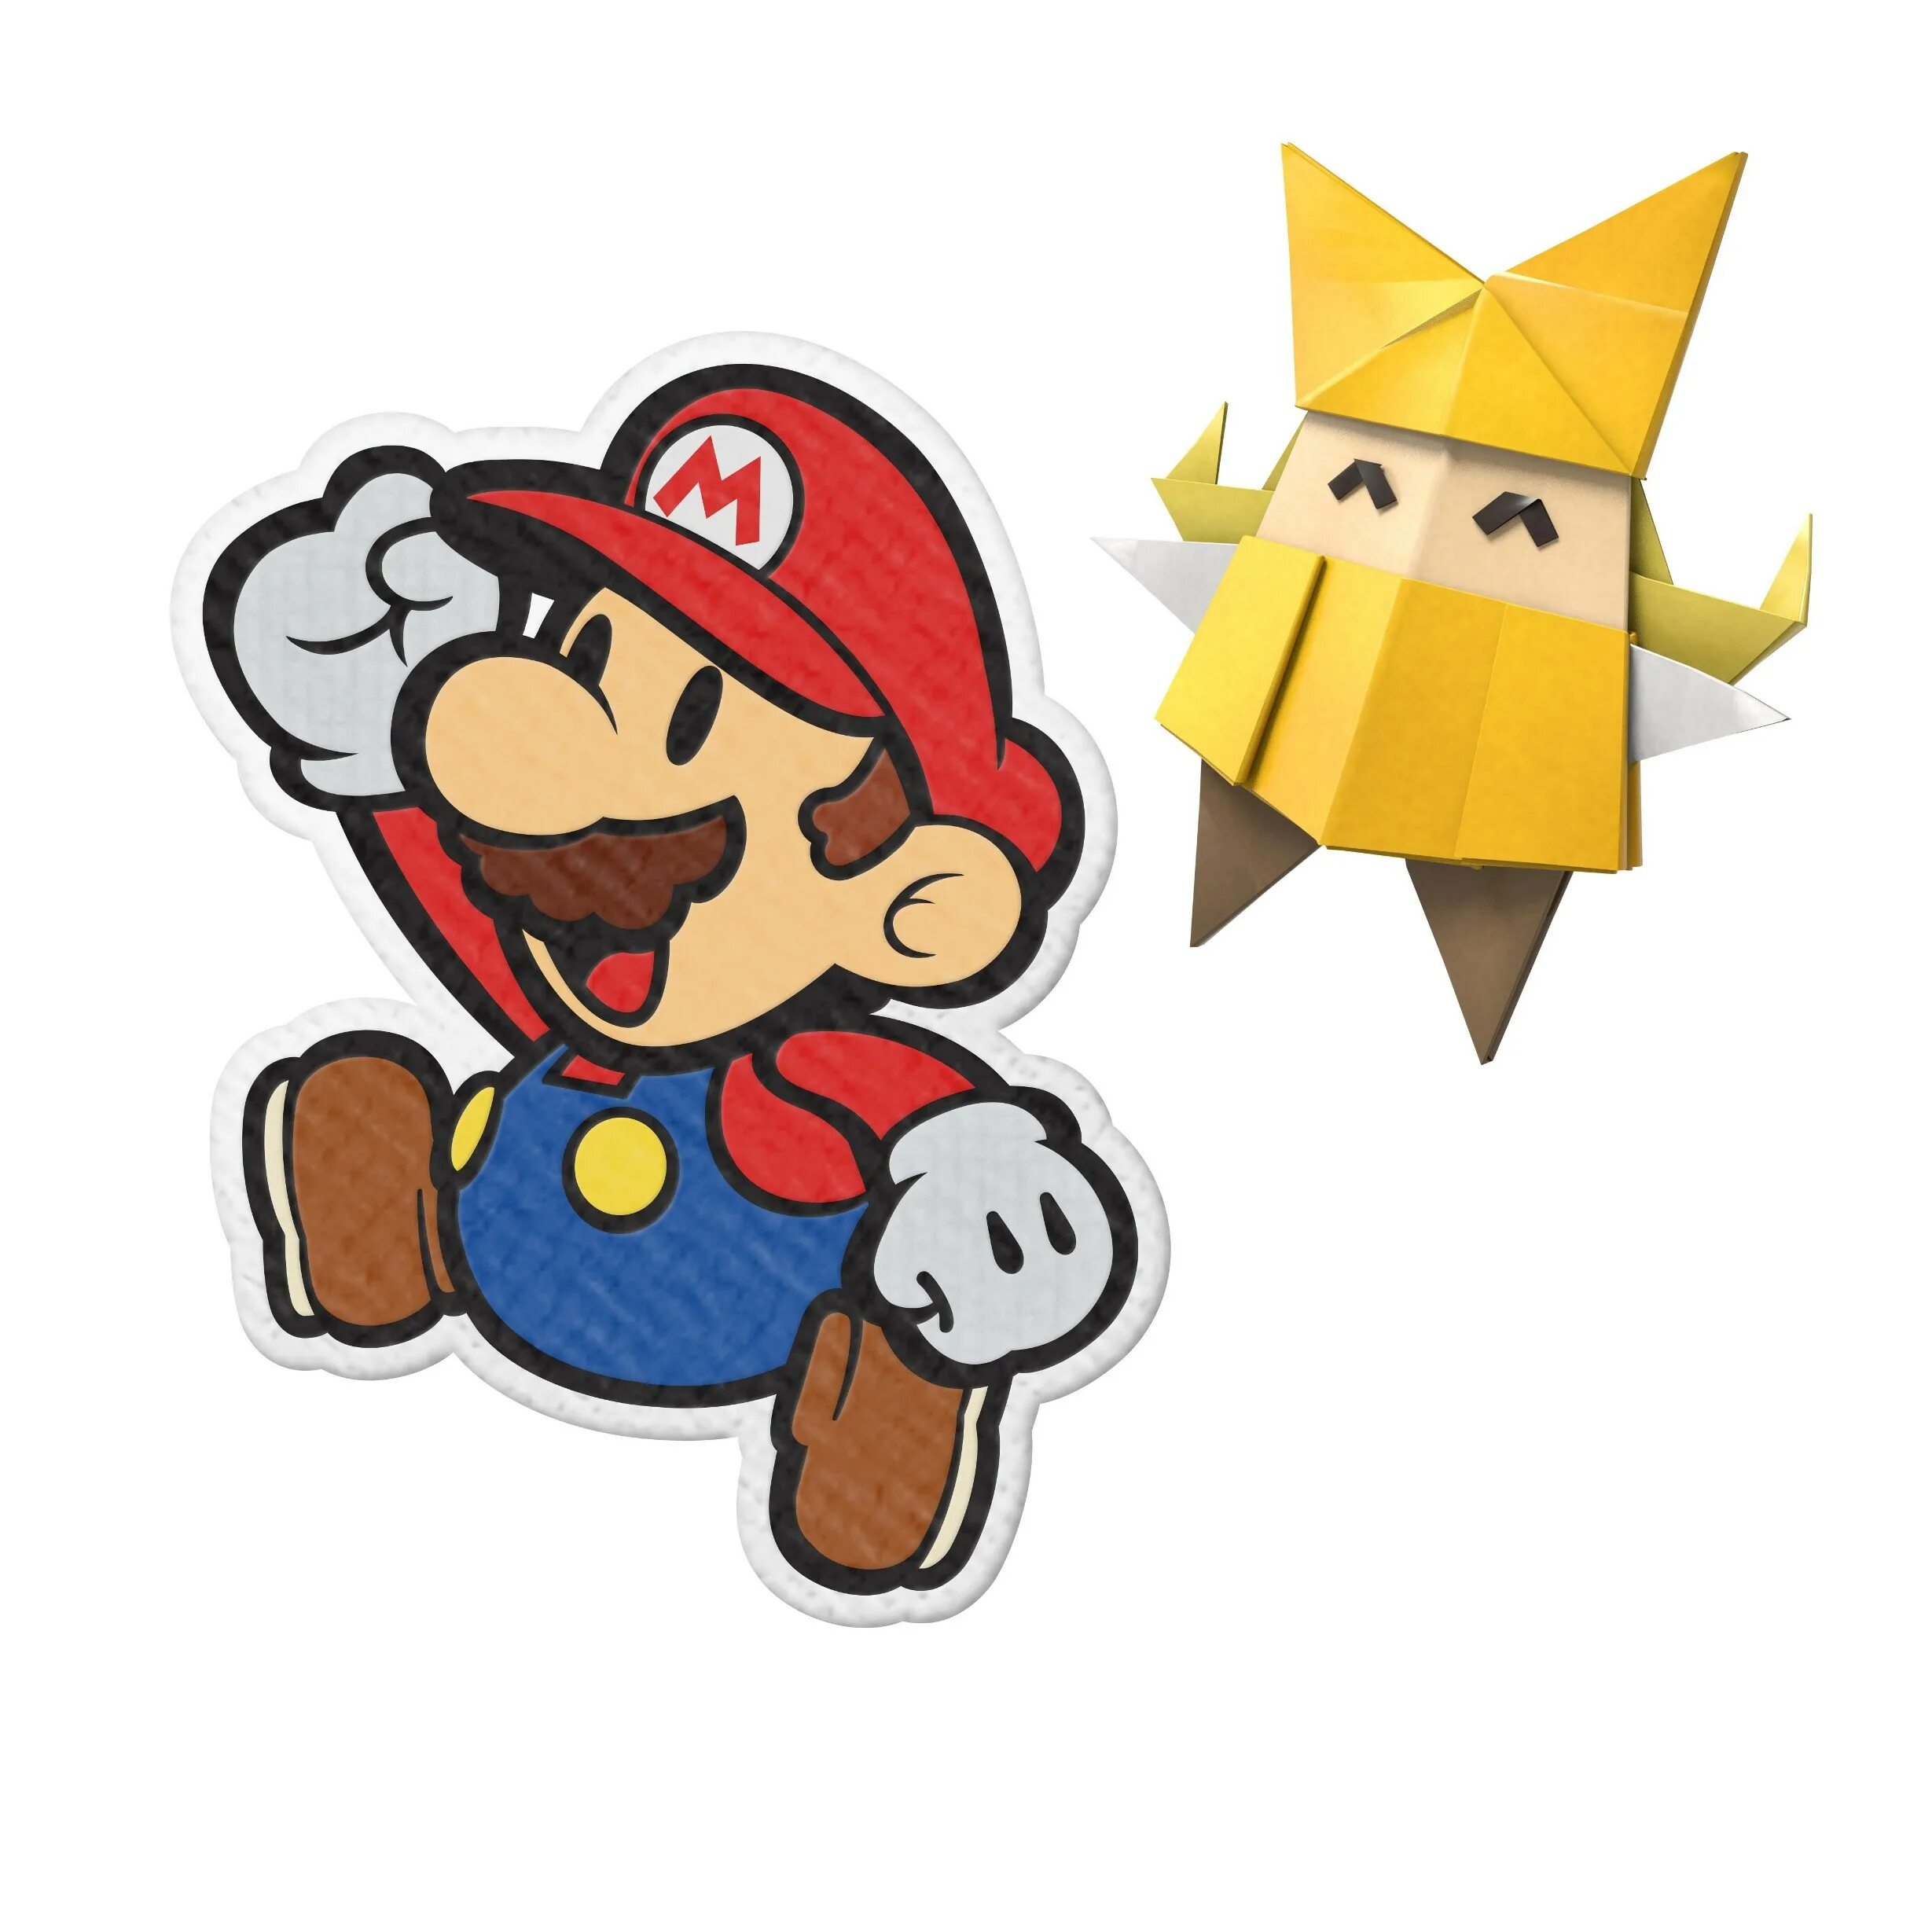 Paper mario origami. Paper Mario Origami King Nintendo Switch. Paper Mario Origami King. Paper Mario: the Origami.... Игра paper Mario: the Origami King.